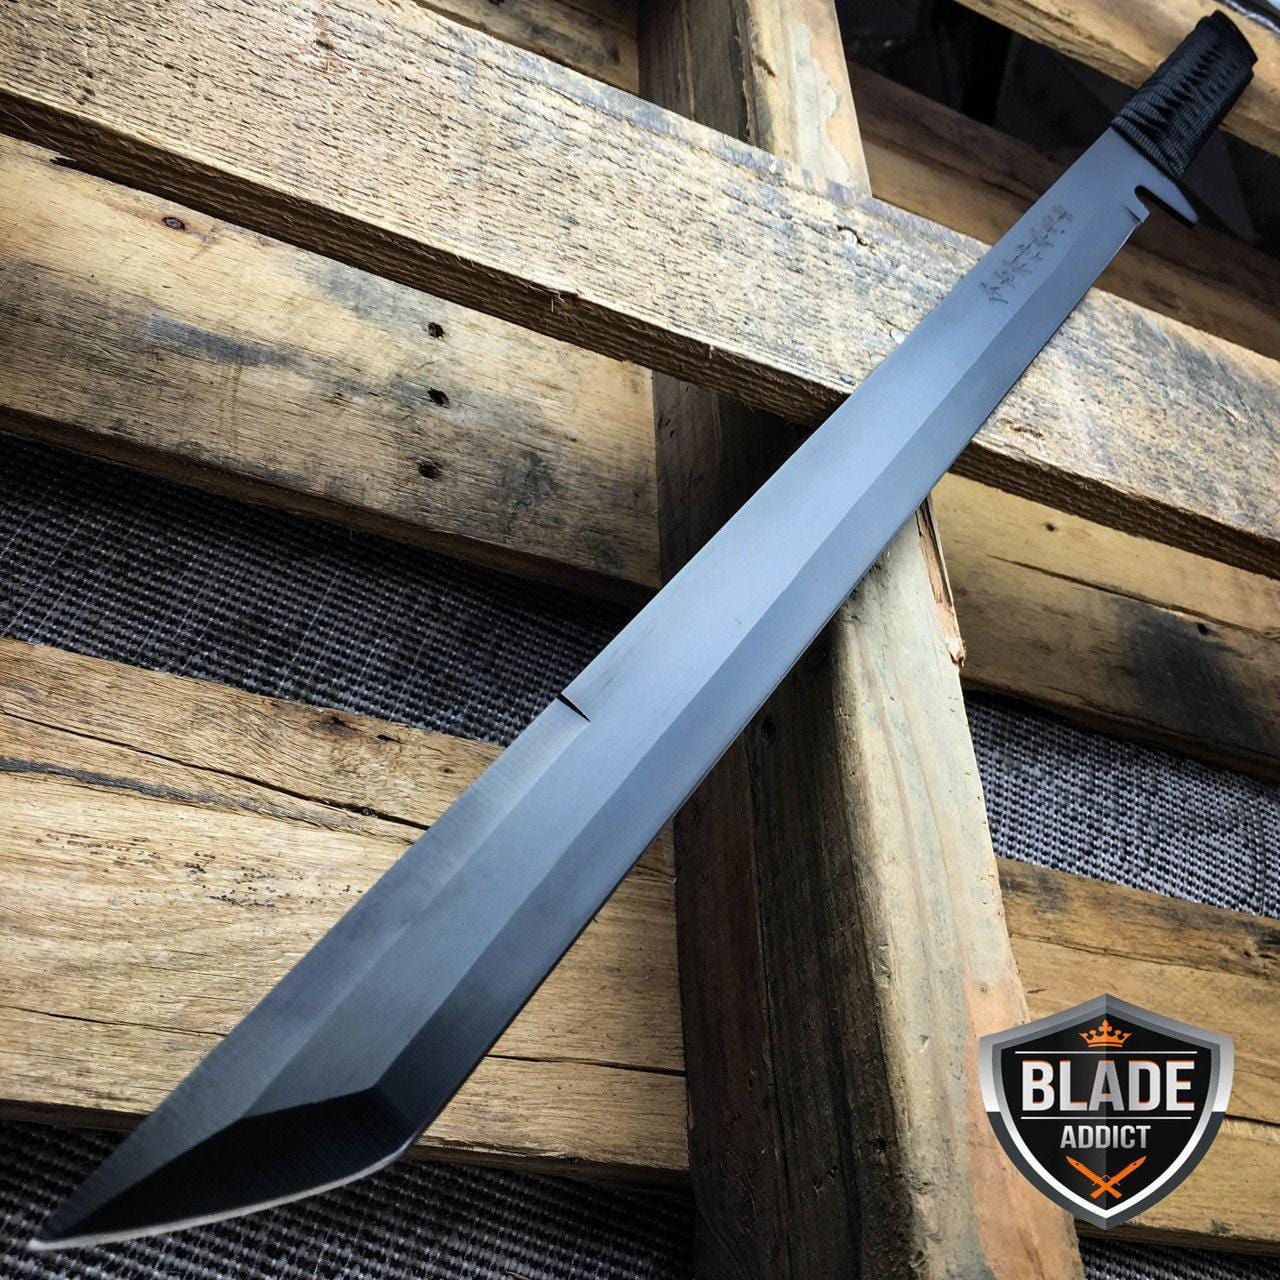 2 Pc 27 Full Tang Ninja Swords Zombie Tactical Survival Knife Blade Addict 0143